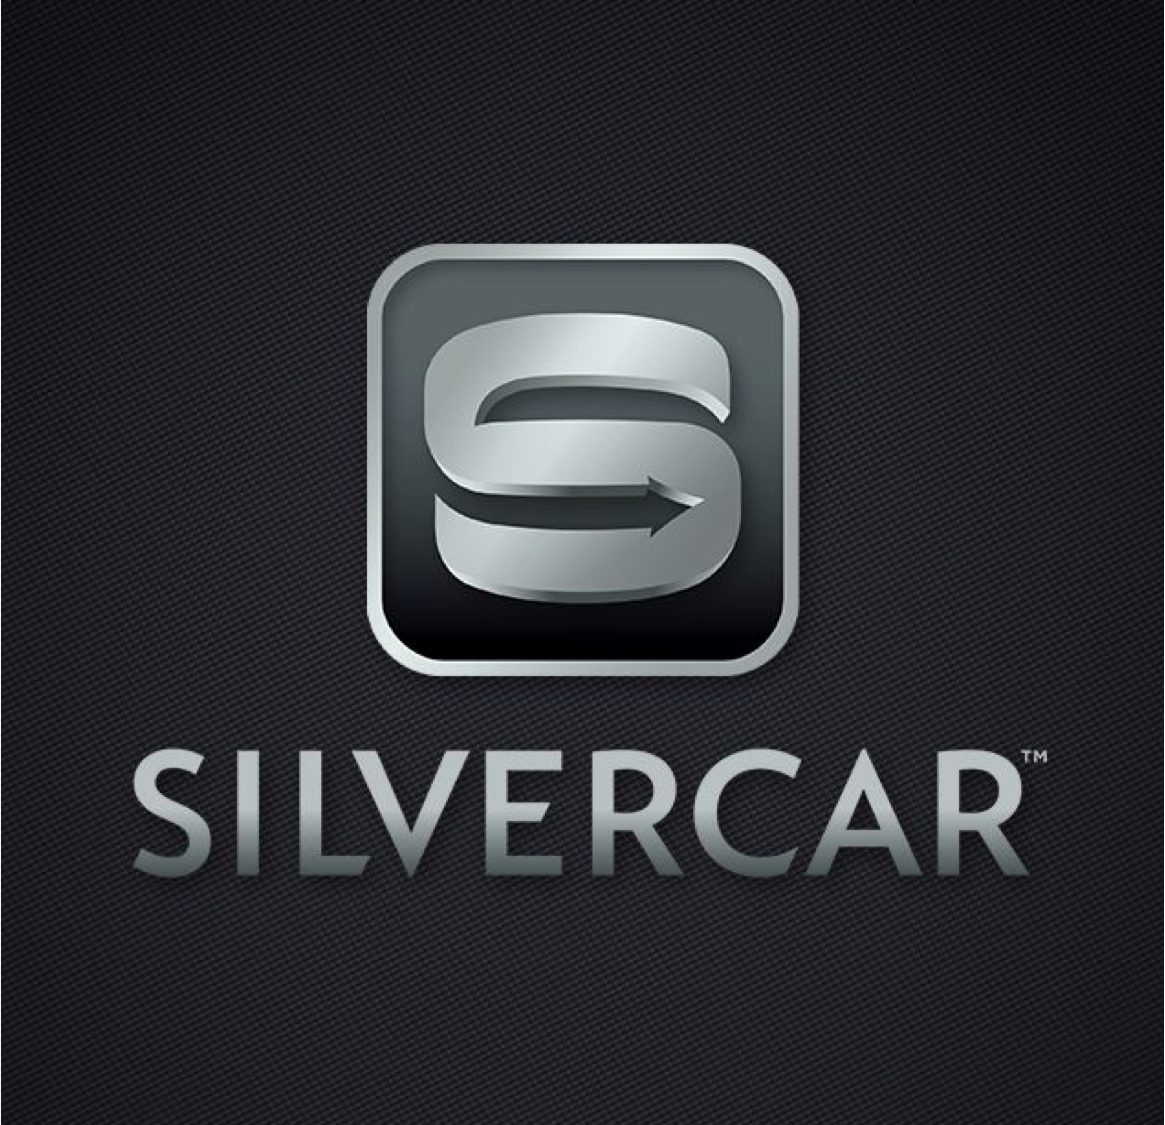 Silvercar Logo horiz